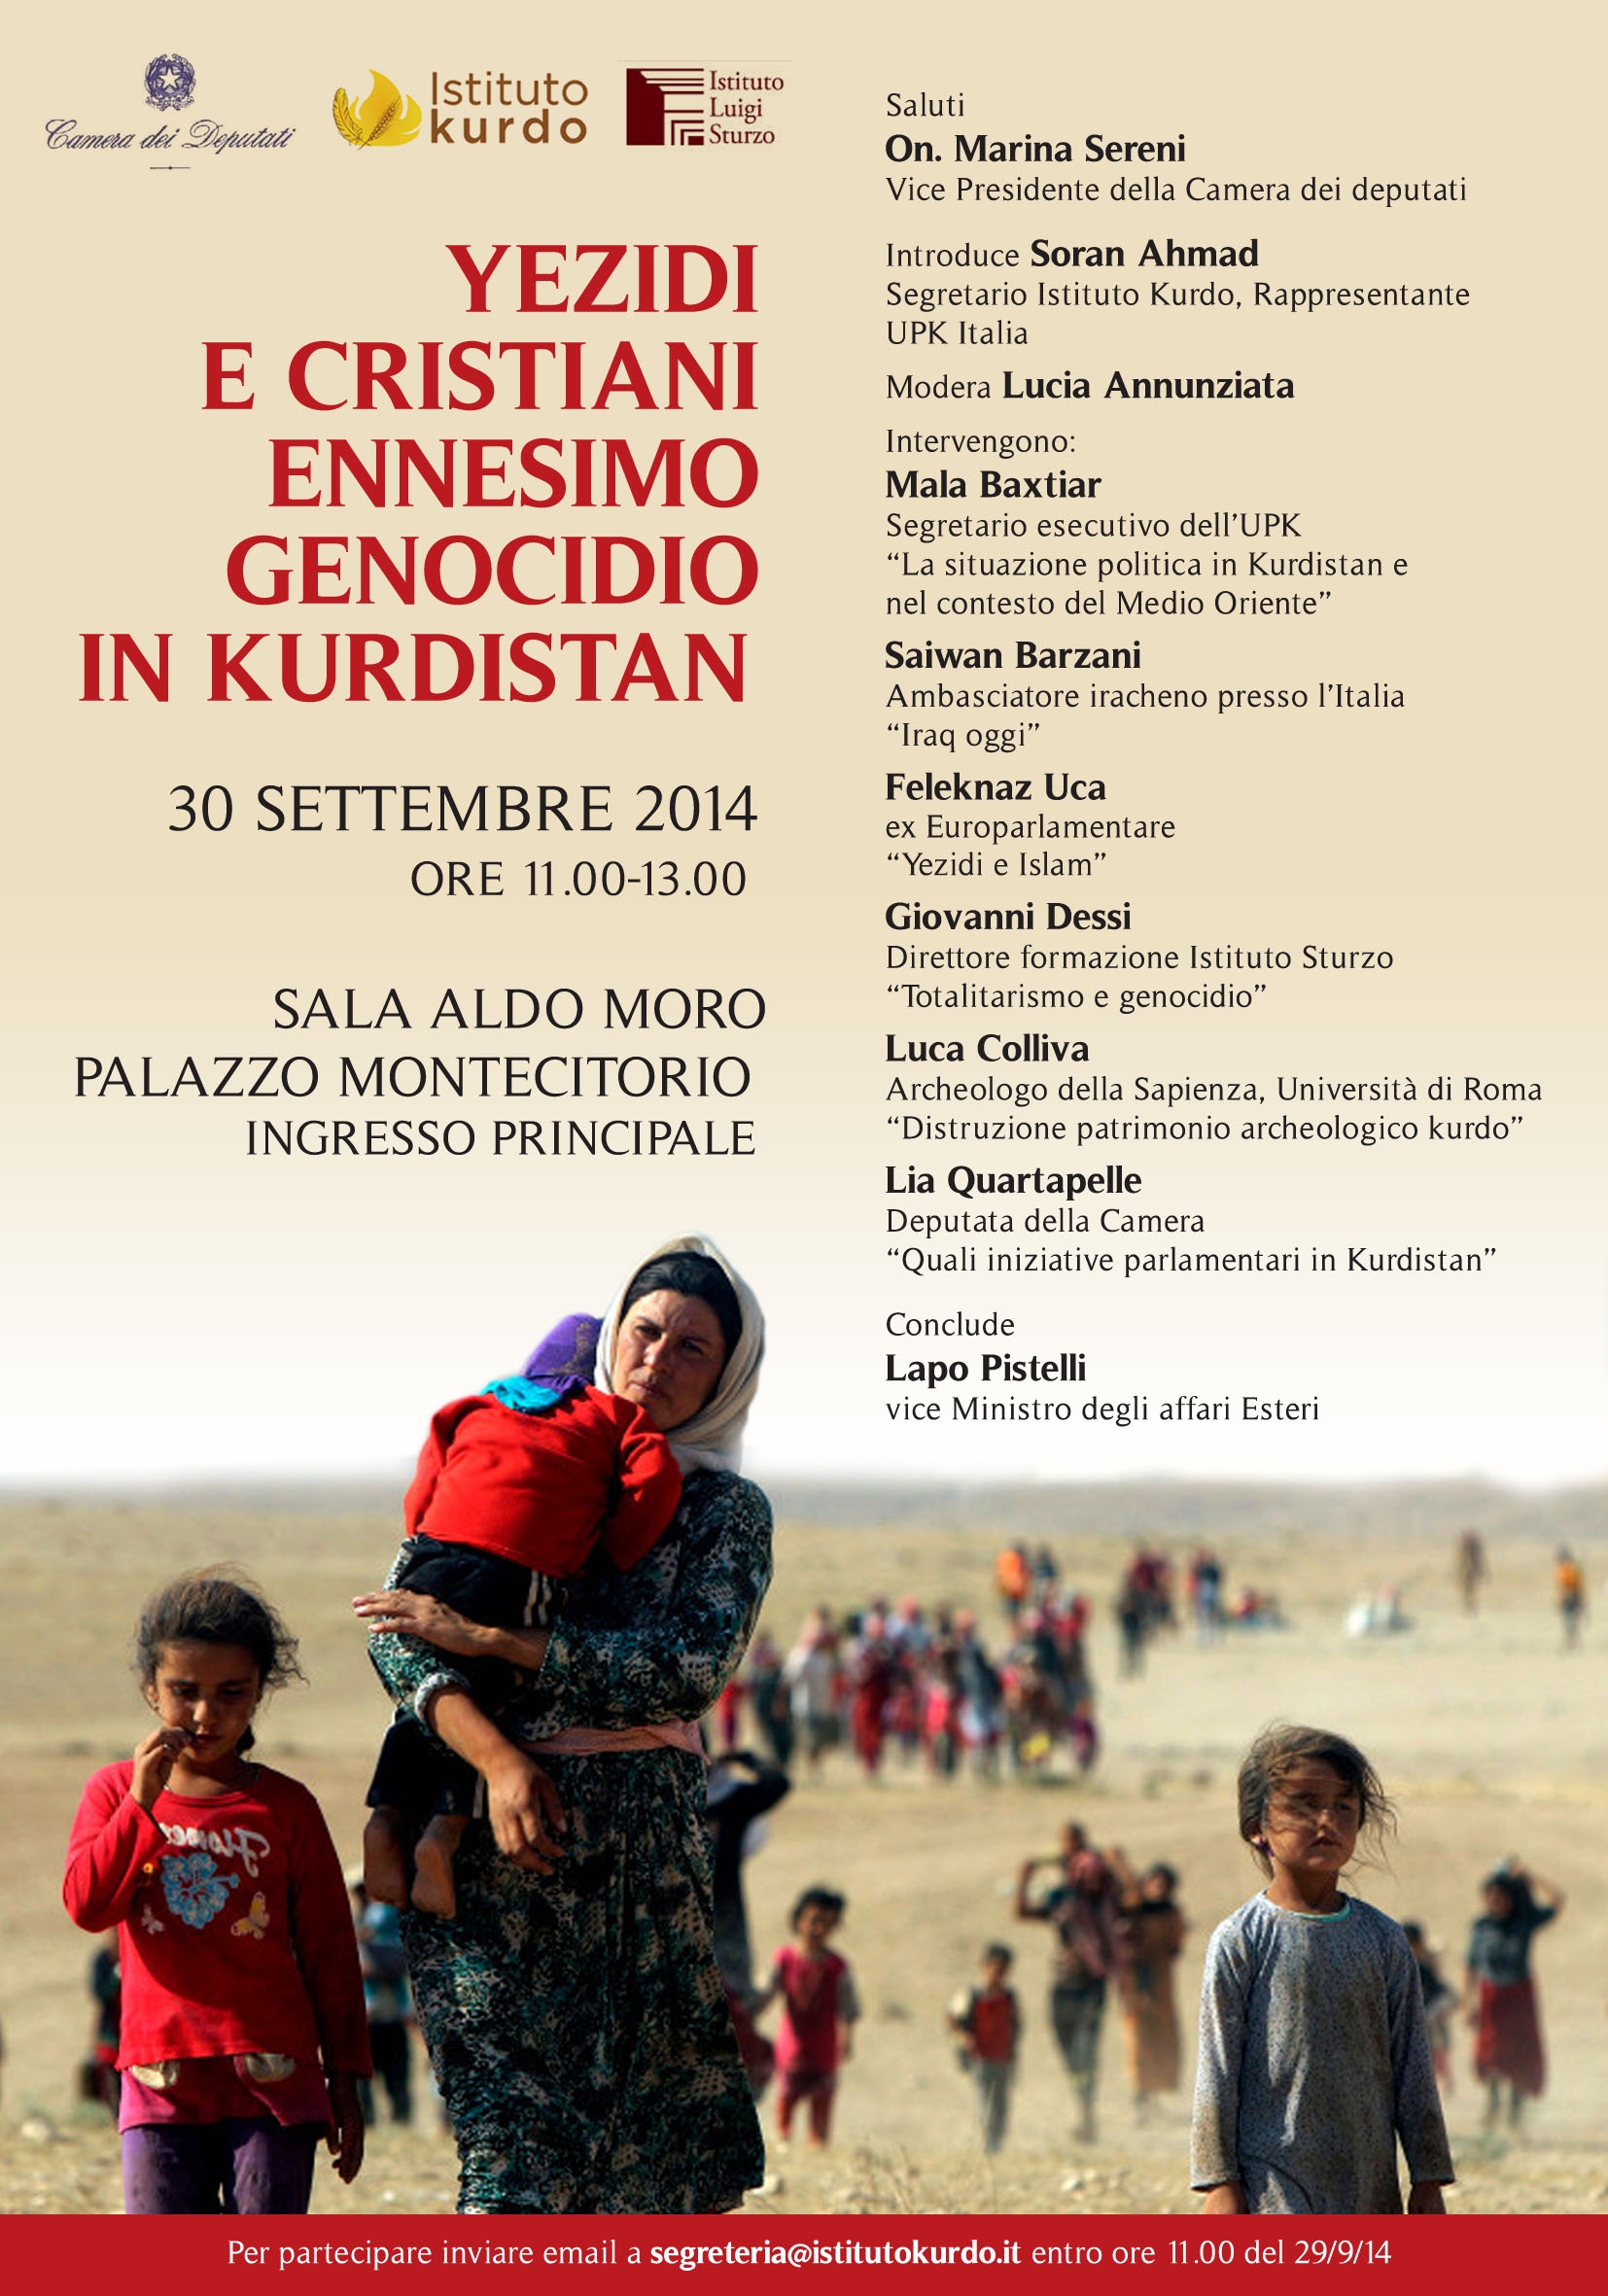 Yezidi e Cristiani, ennesimo genocidio in Kurdistan